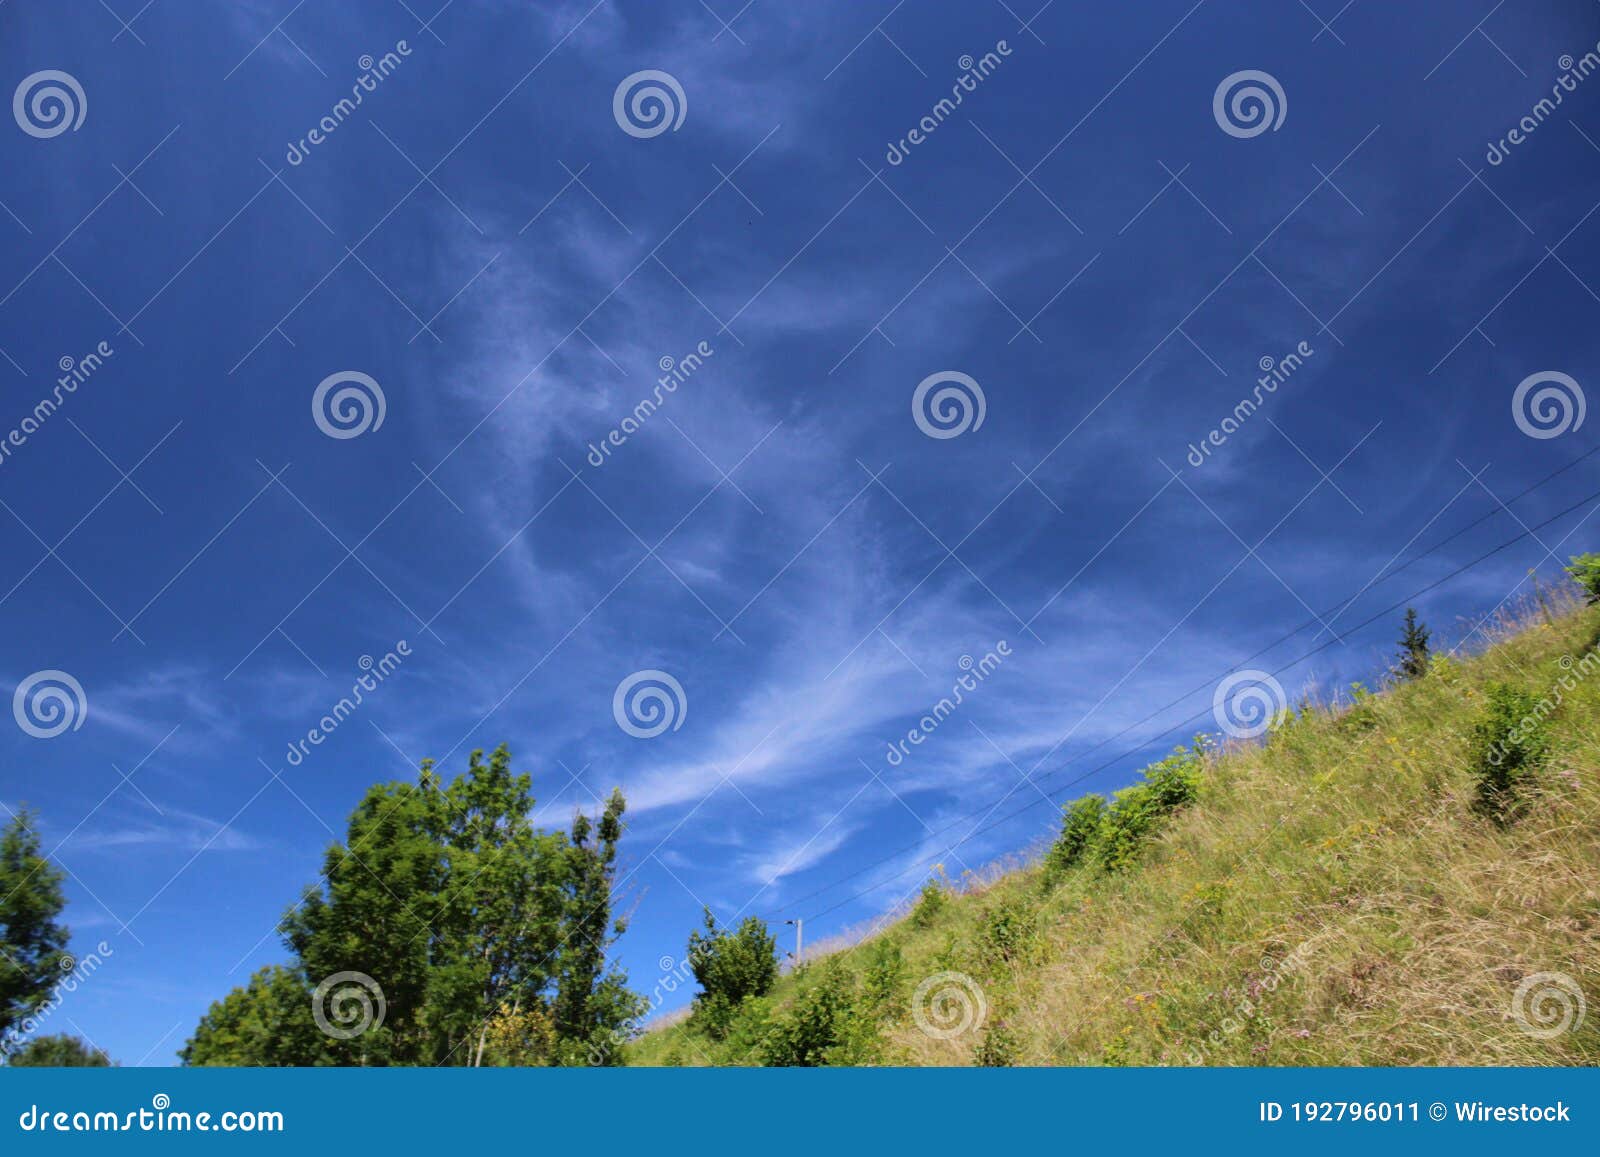 low angle shot of the trees under a blue sky  in lac de l'entonnoir near the bouverans, france